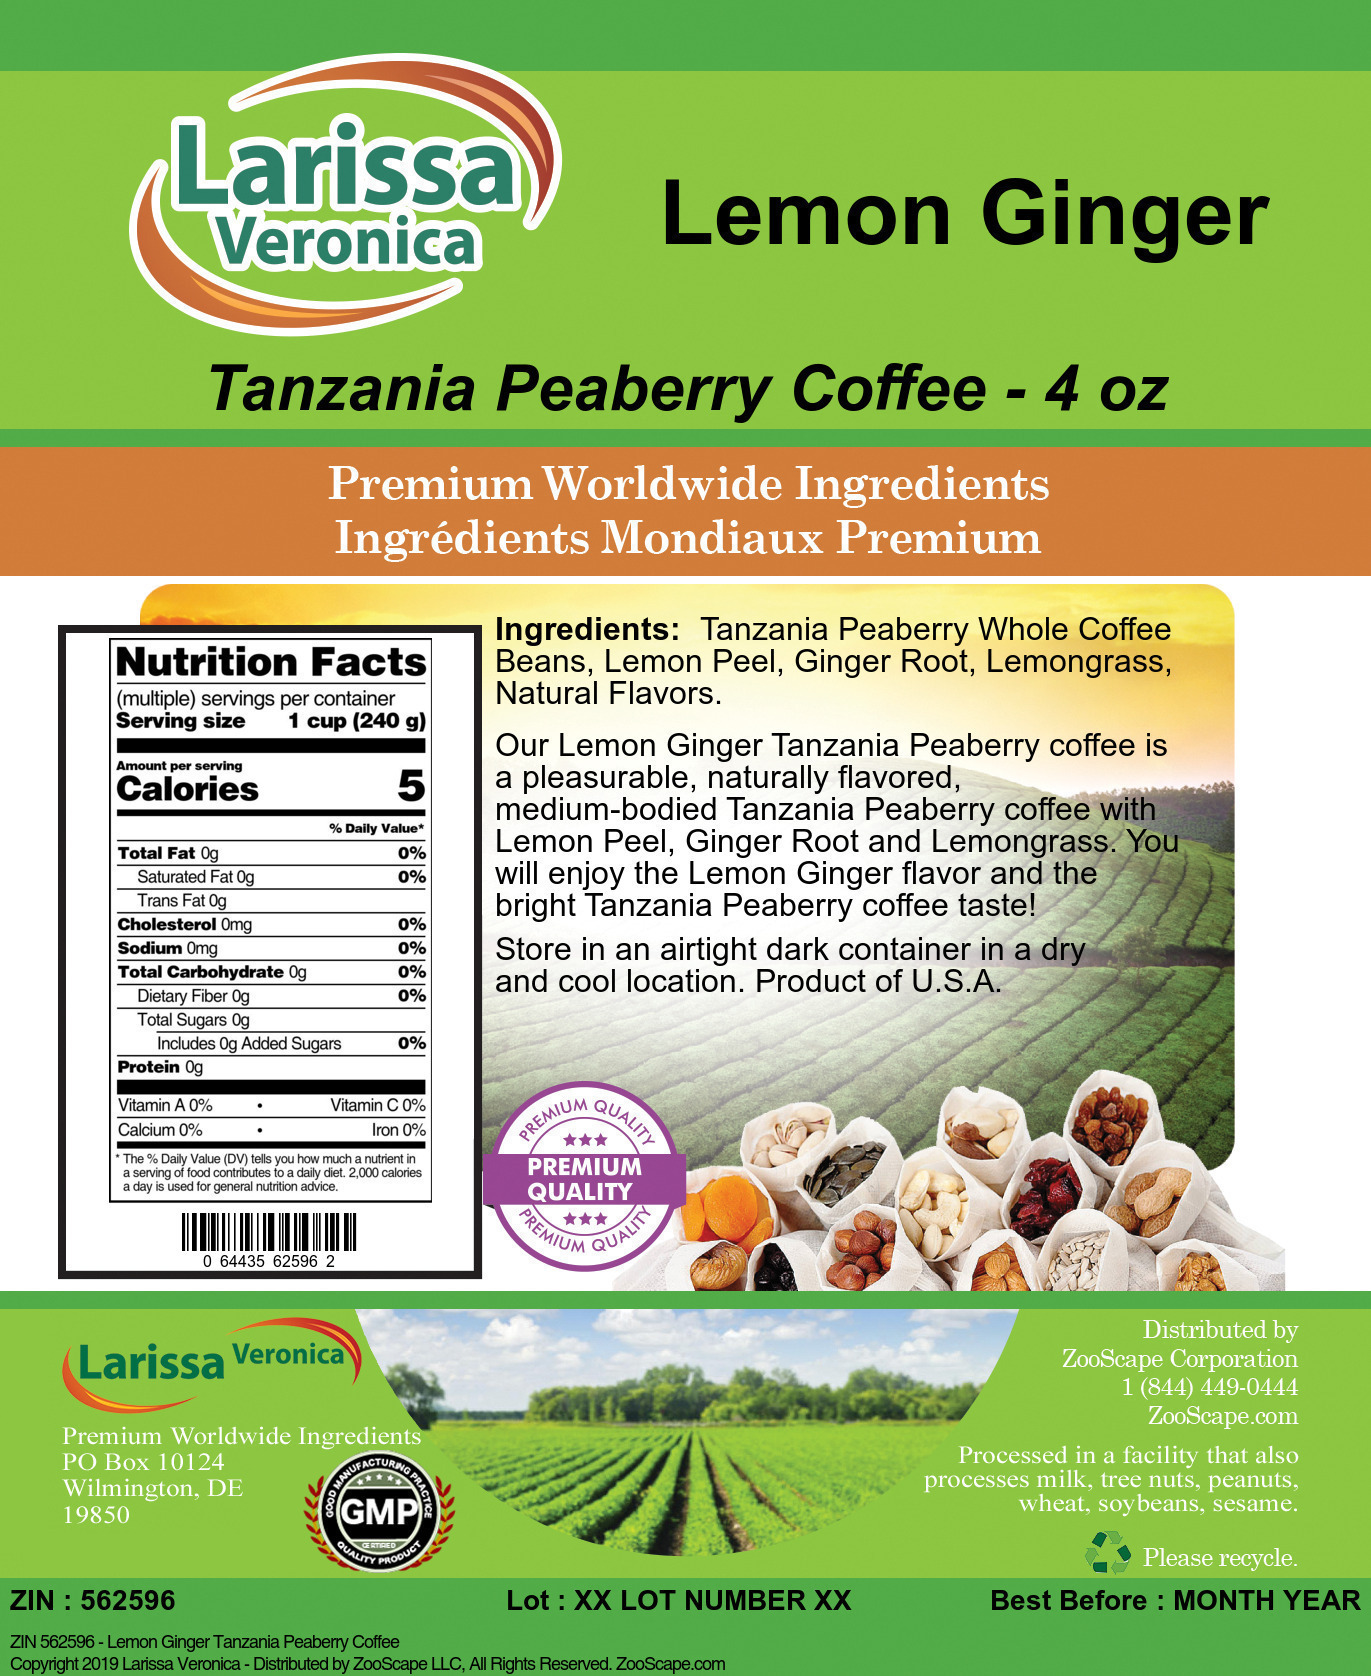 Lemon Ginger Tanzania Peaberry Coffee - Label